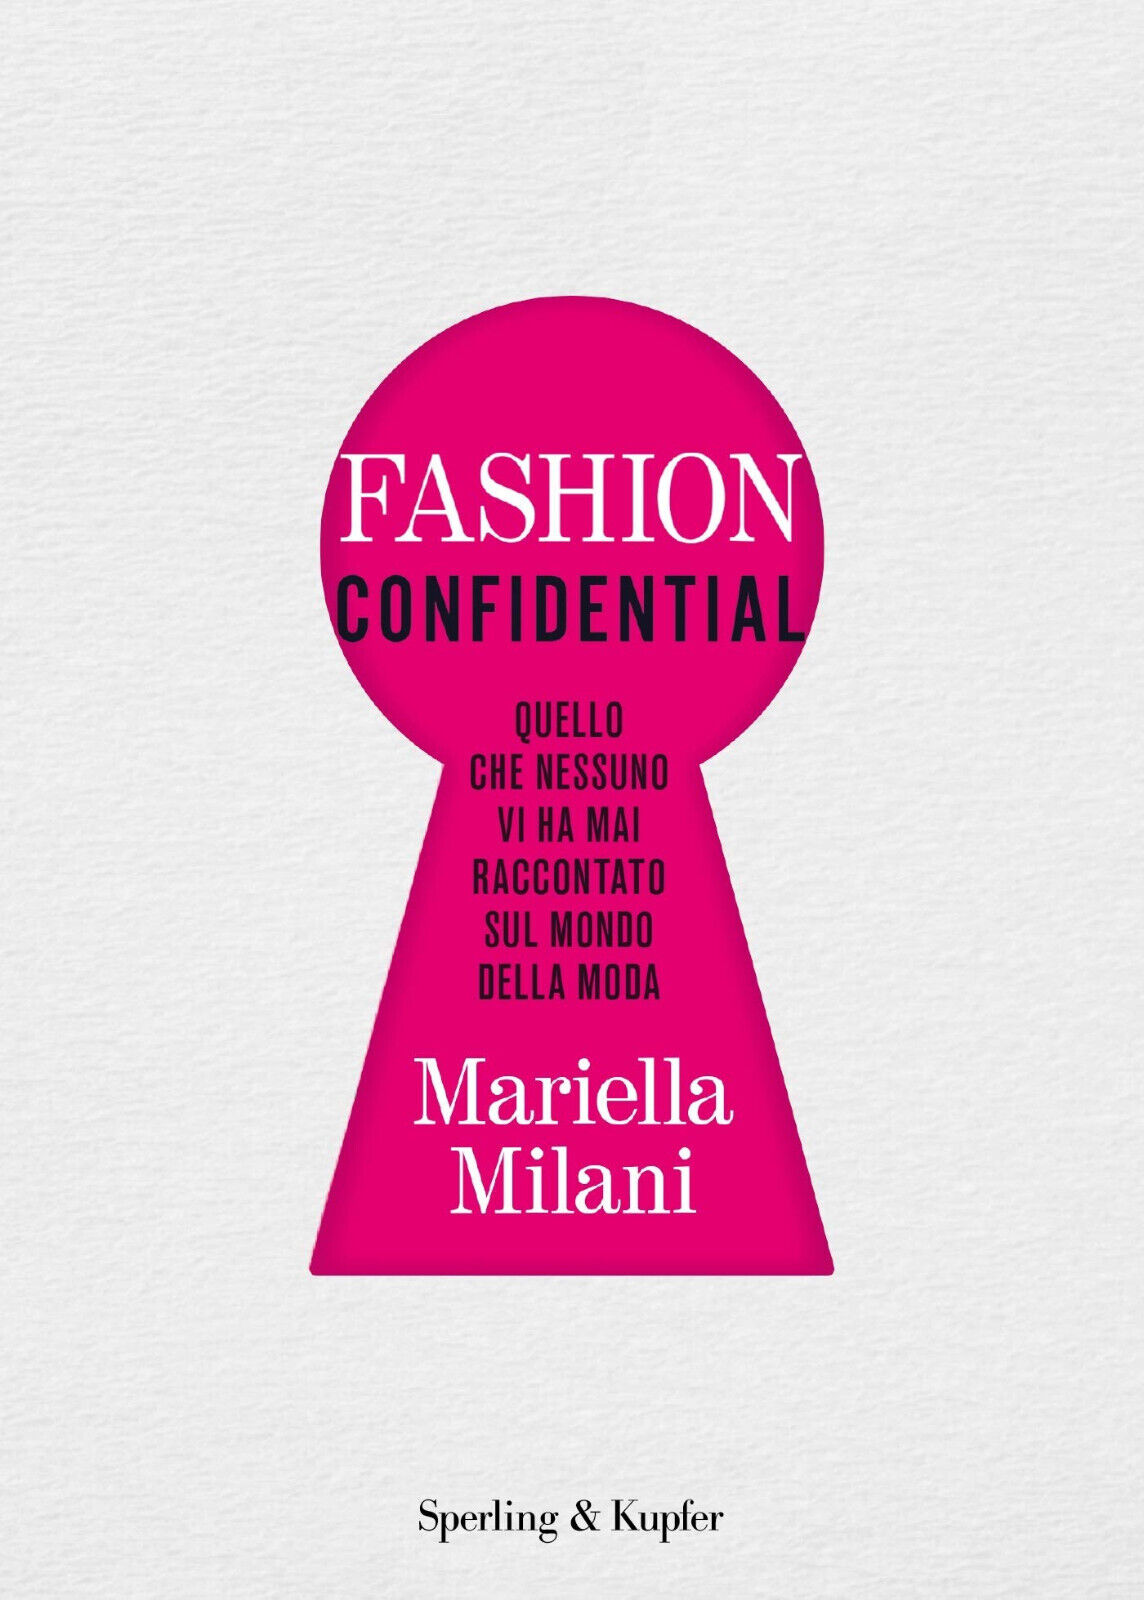 Fashion confidential - Mariella Milani - Sperling & Kupfer, 2021